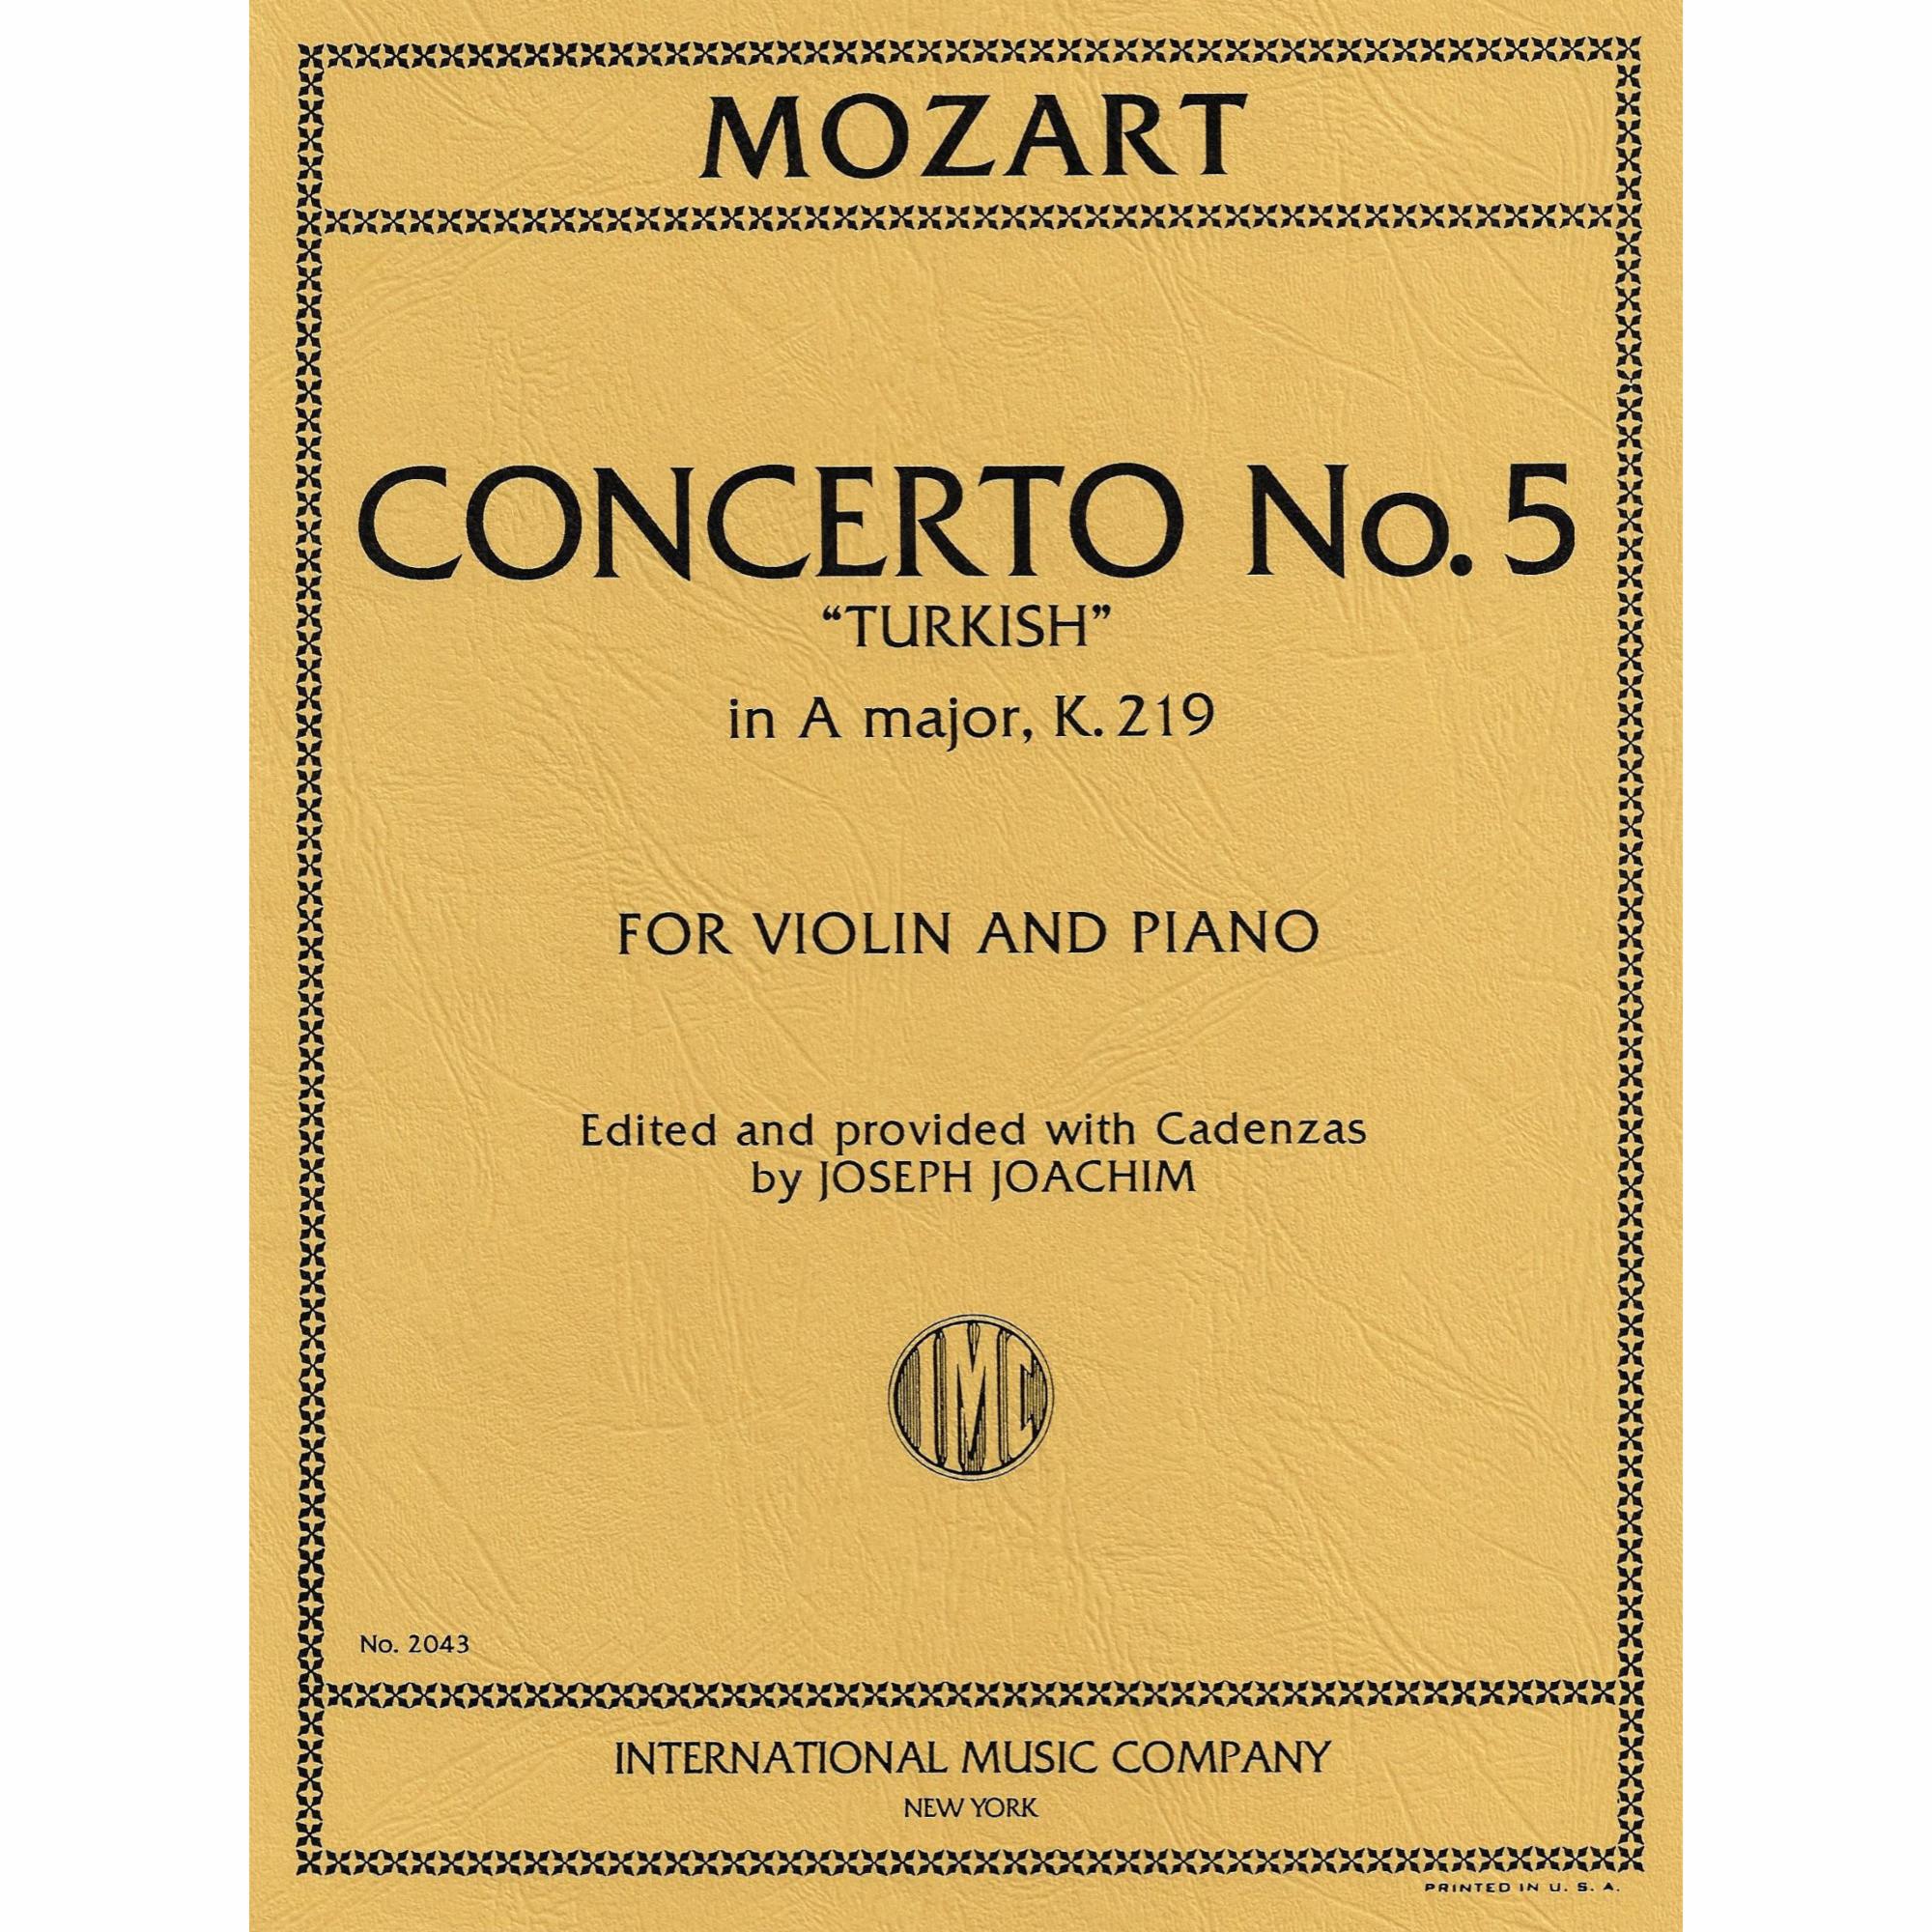 Mozart -- Concerto No. 5 in A Major, K. 219 'Turkish' for Violin and Piano